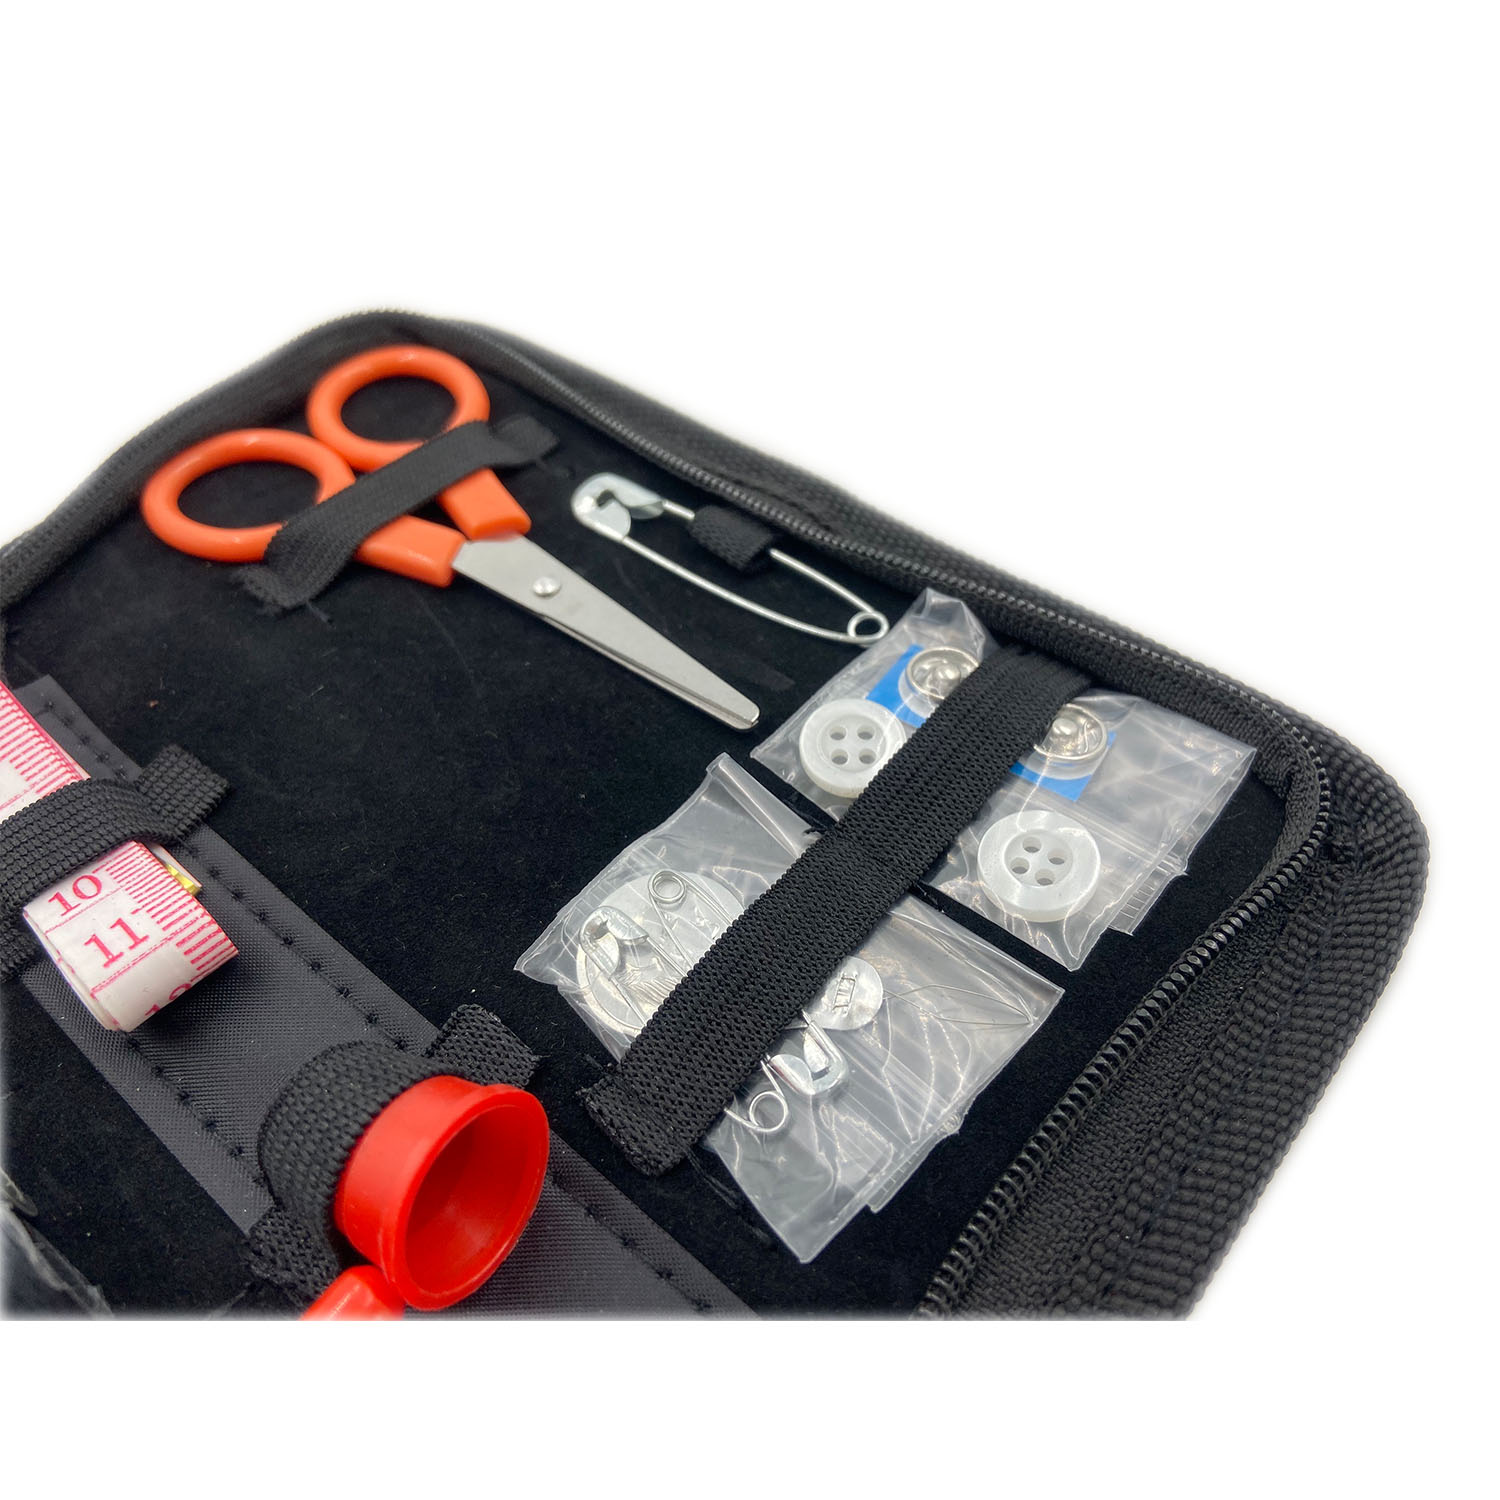 Free Custom Sewing Kit Sample HA-2201-0027 Details